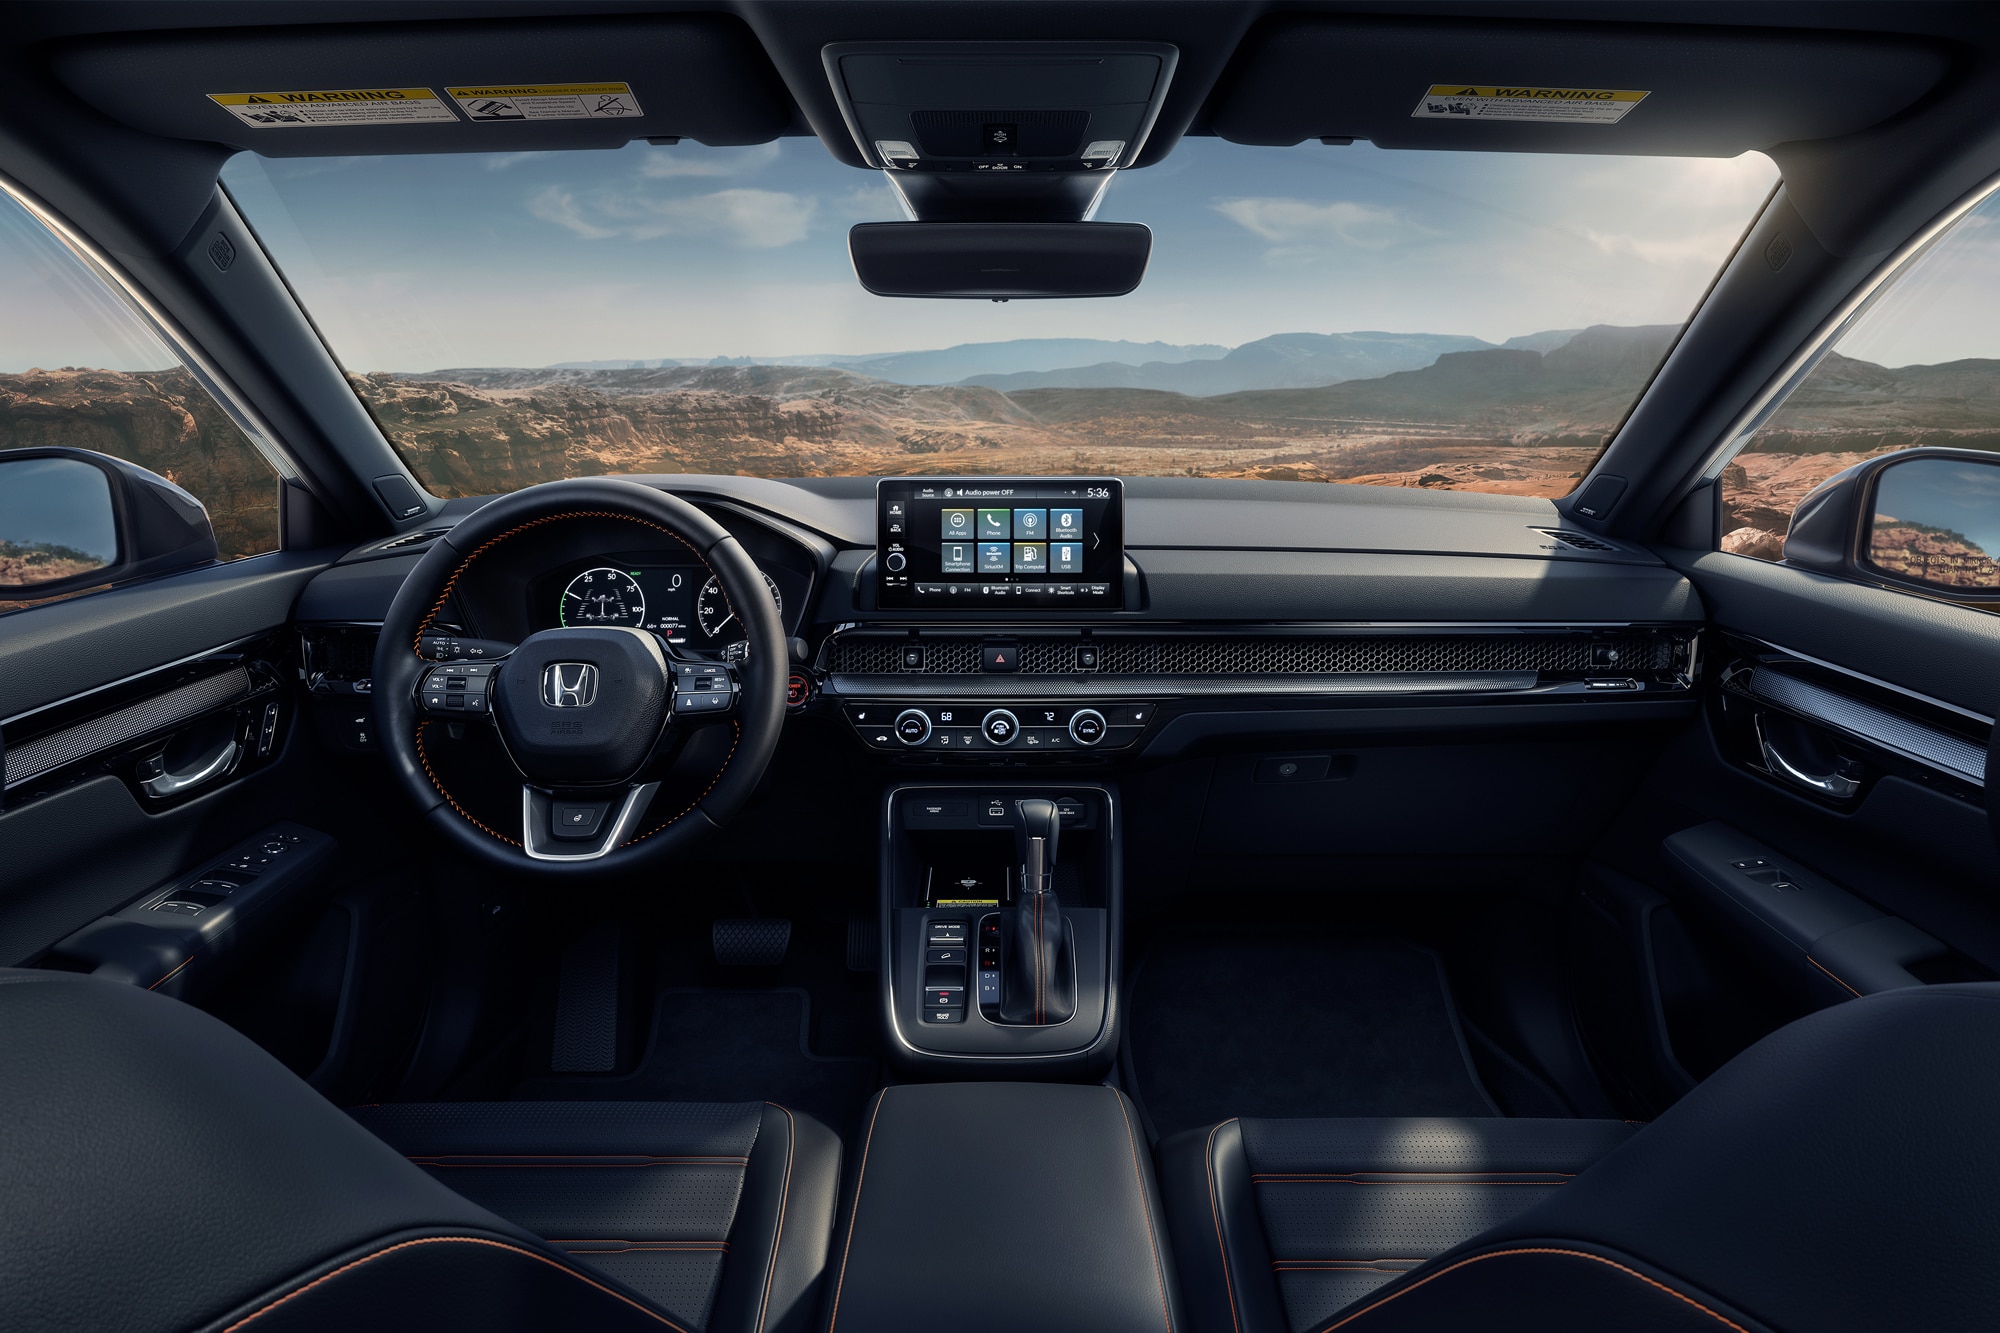 Honda CR-V interior front view